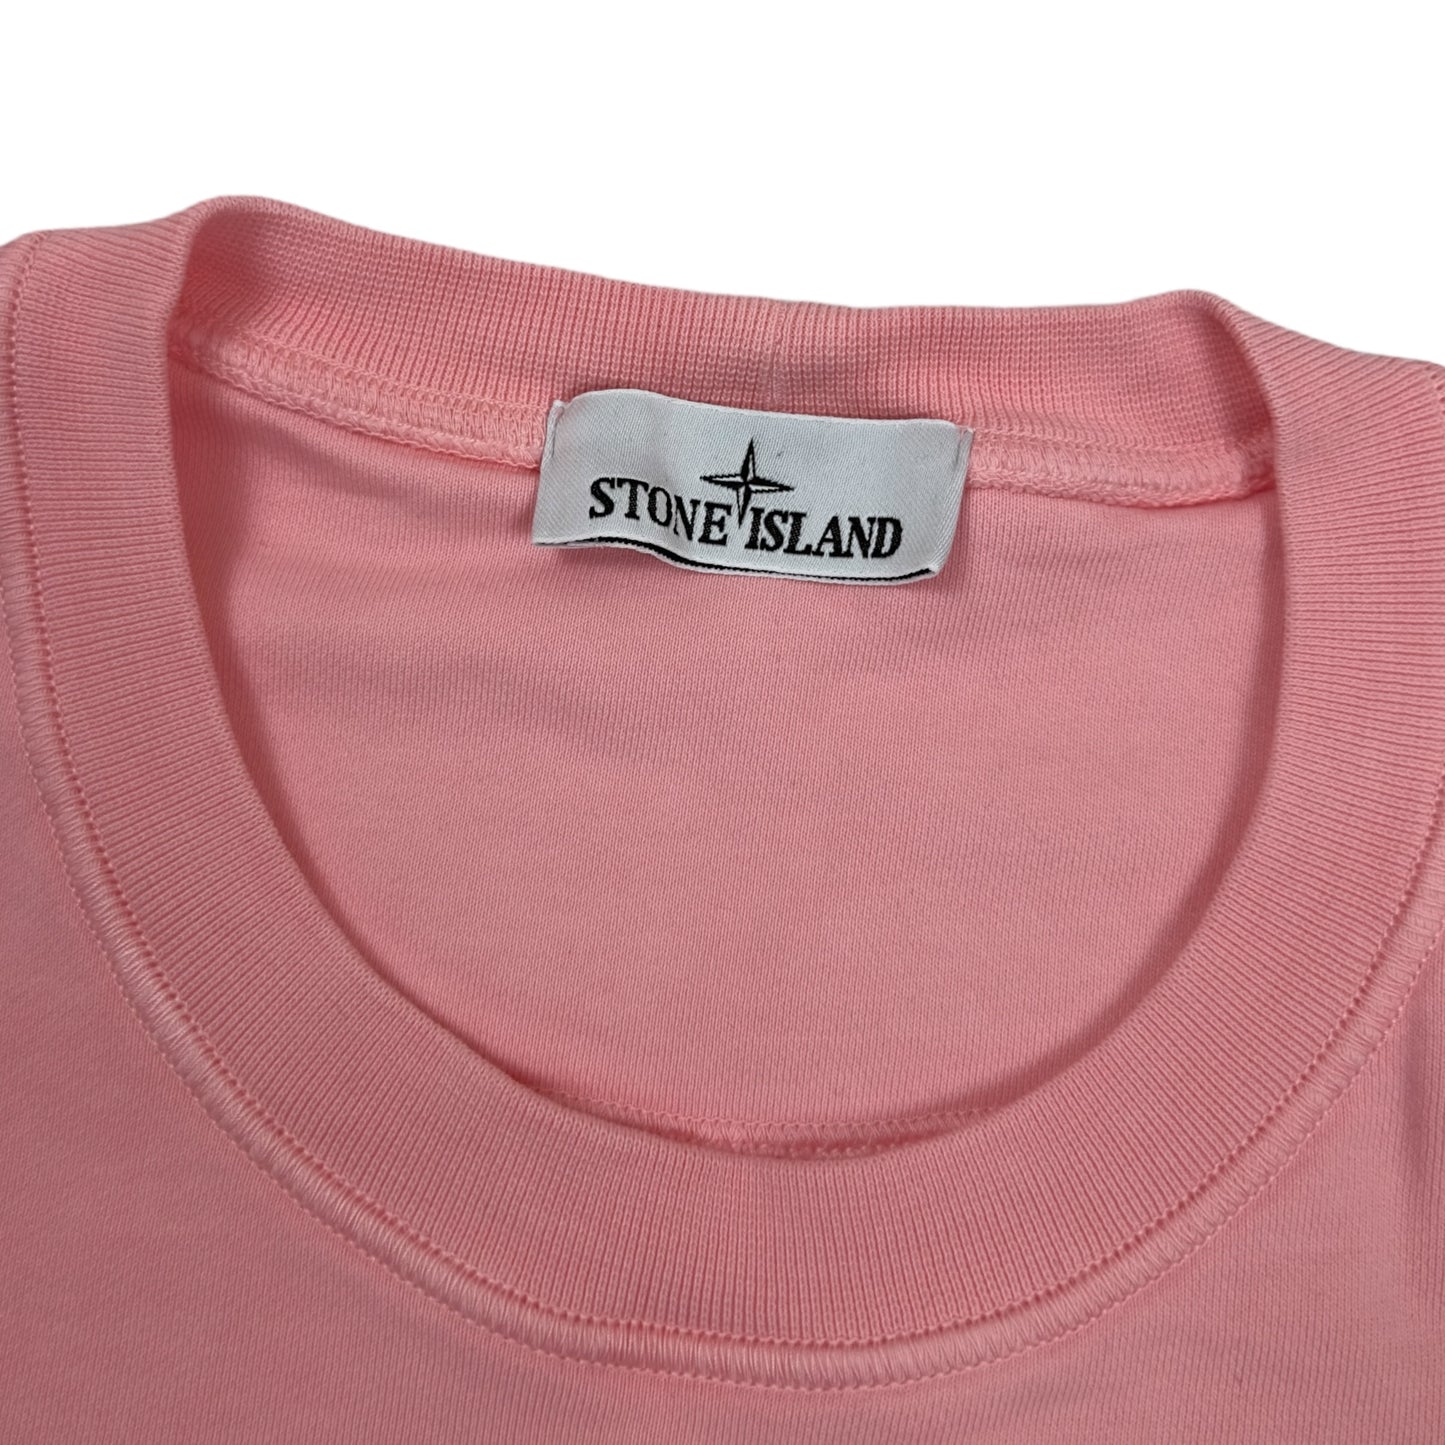 Stone Island Crewneck Sweater - Pink